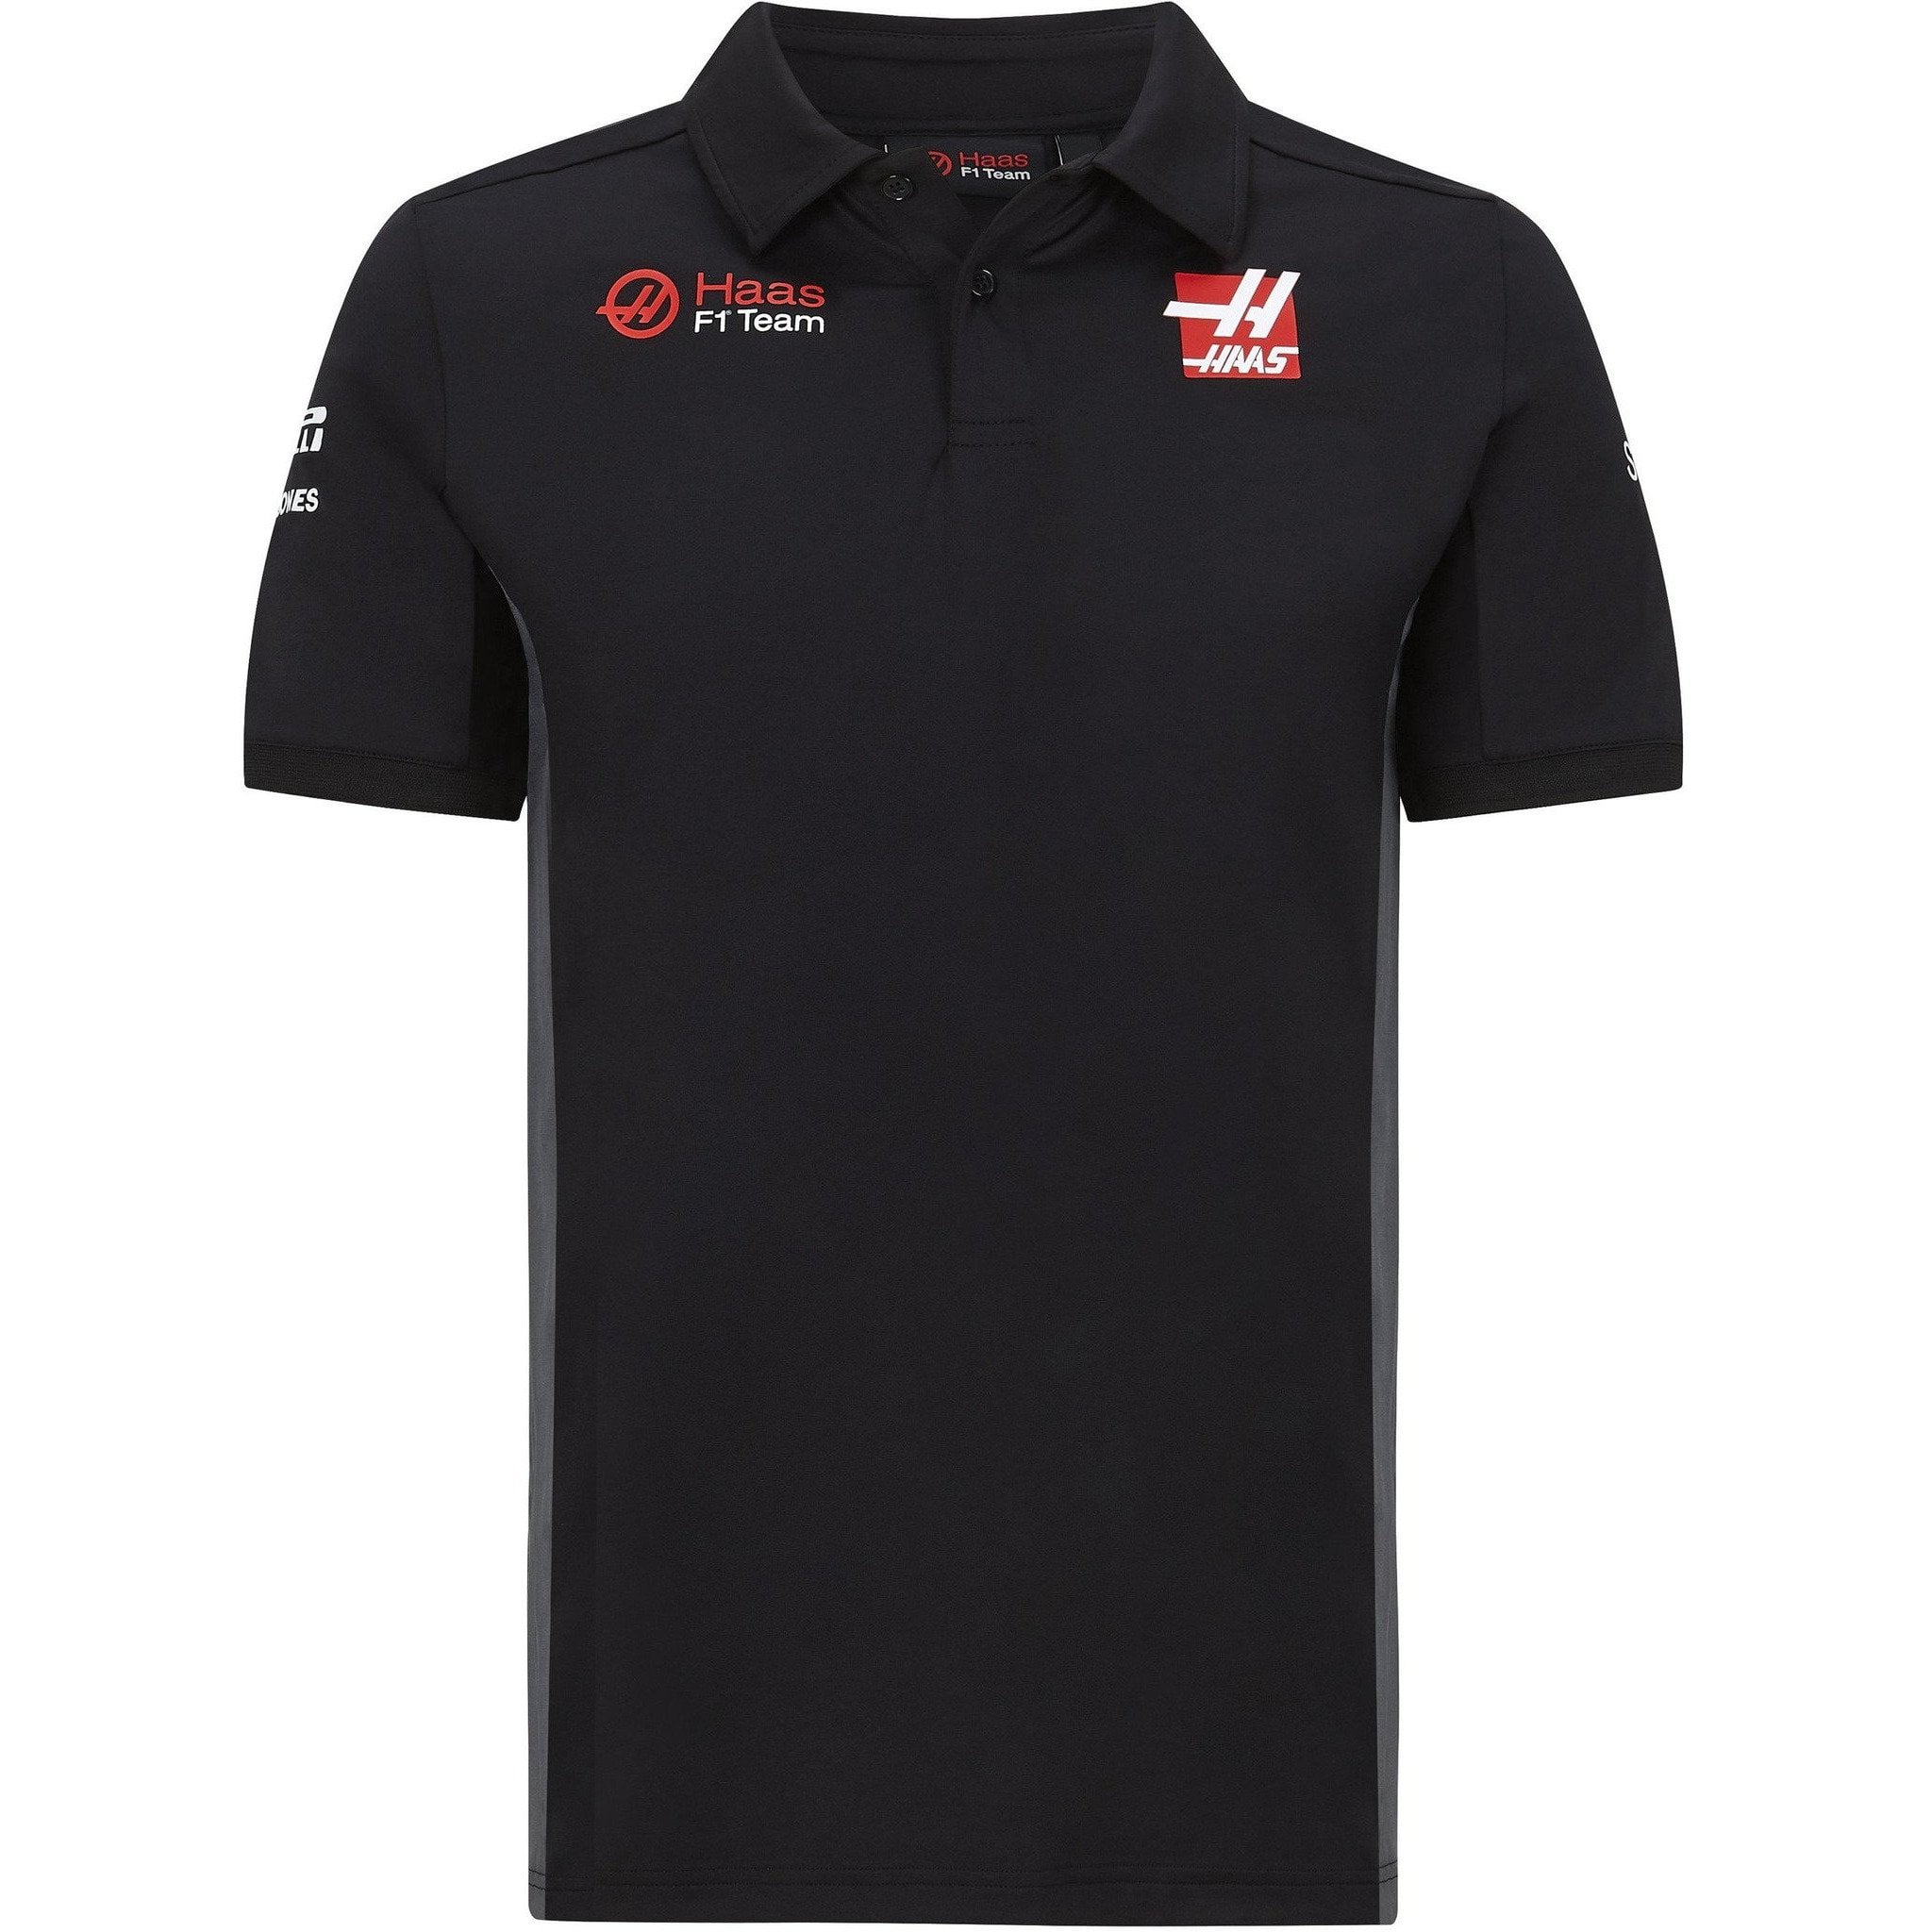 Haas Racing F1 2020 Men's Team Polo Black - Walmart.com